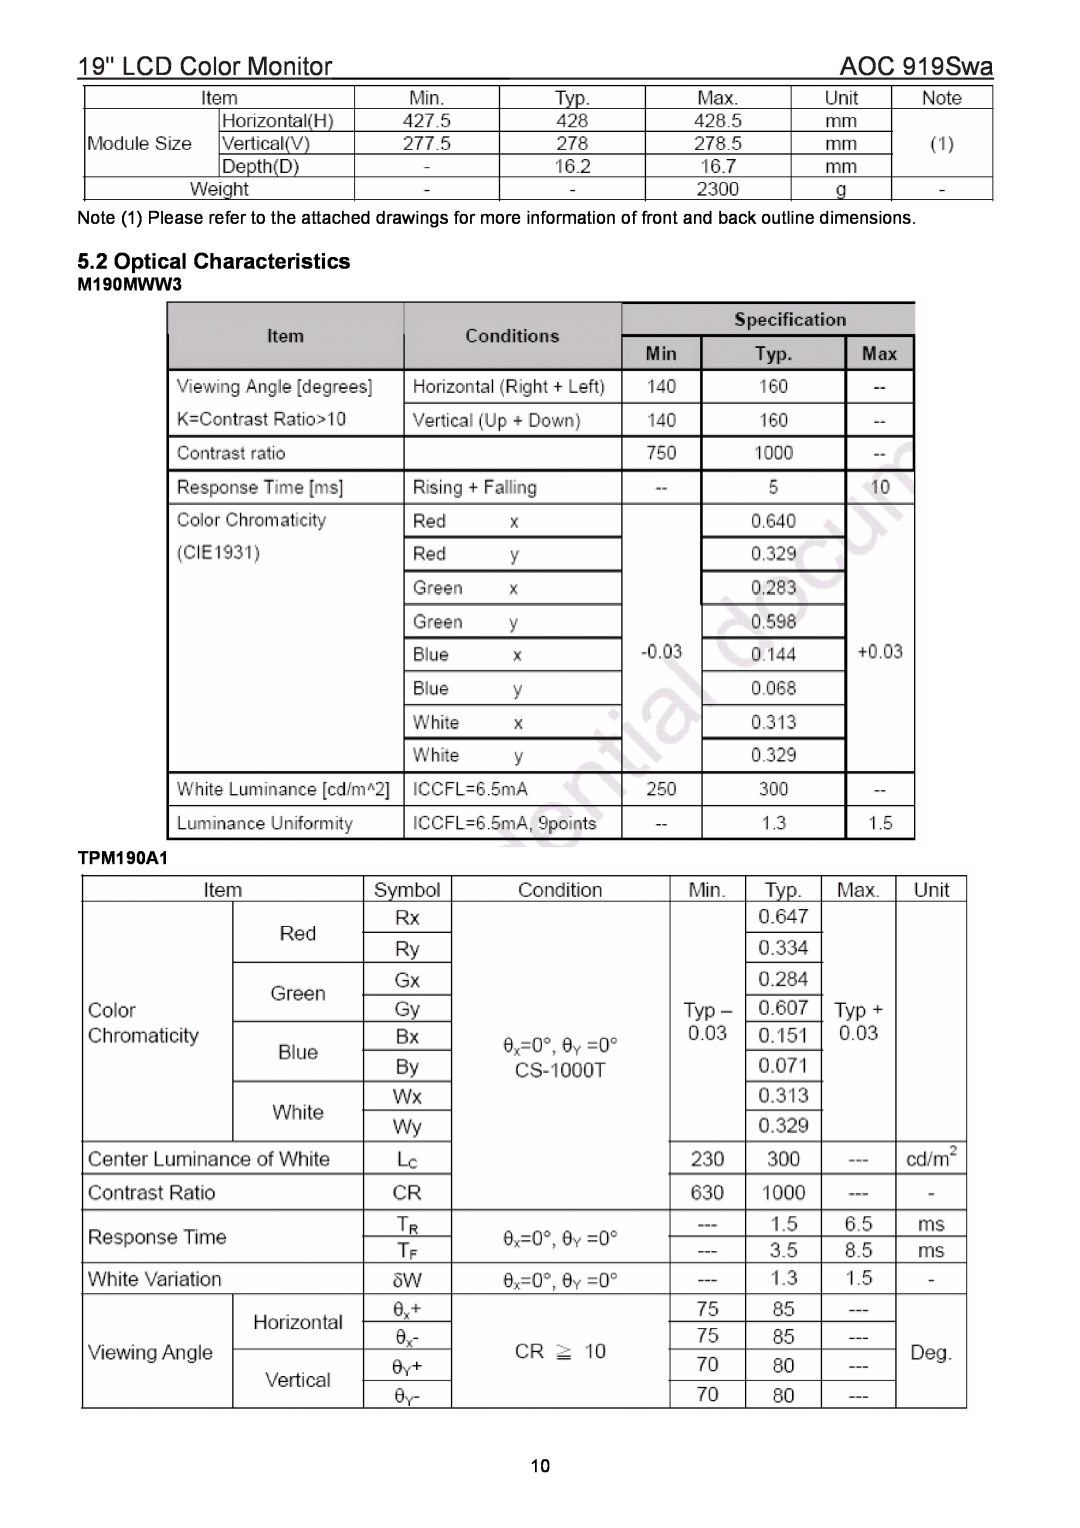 AOC 919SWA manual Optical Characteristics, LCD Color Monitor, AOC 919Swa, M190MWW3 TPM190A1 